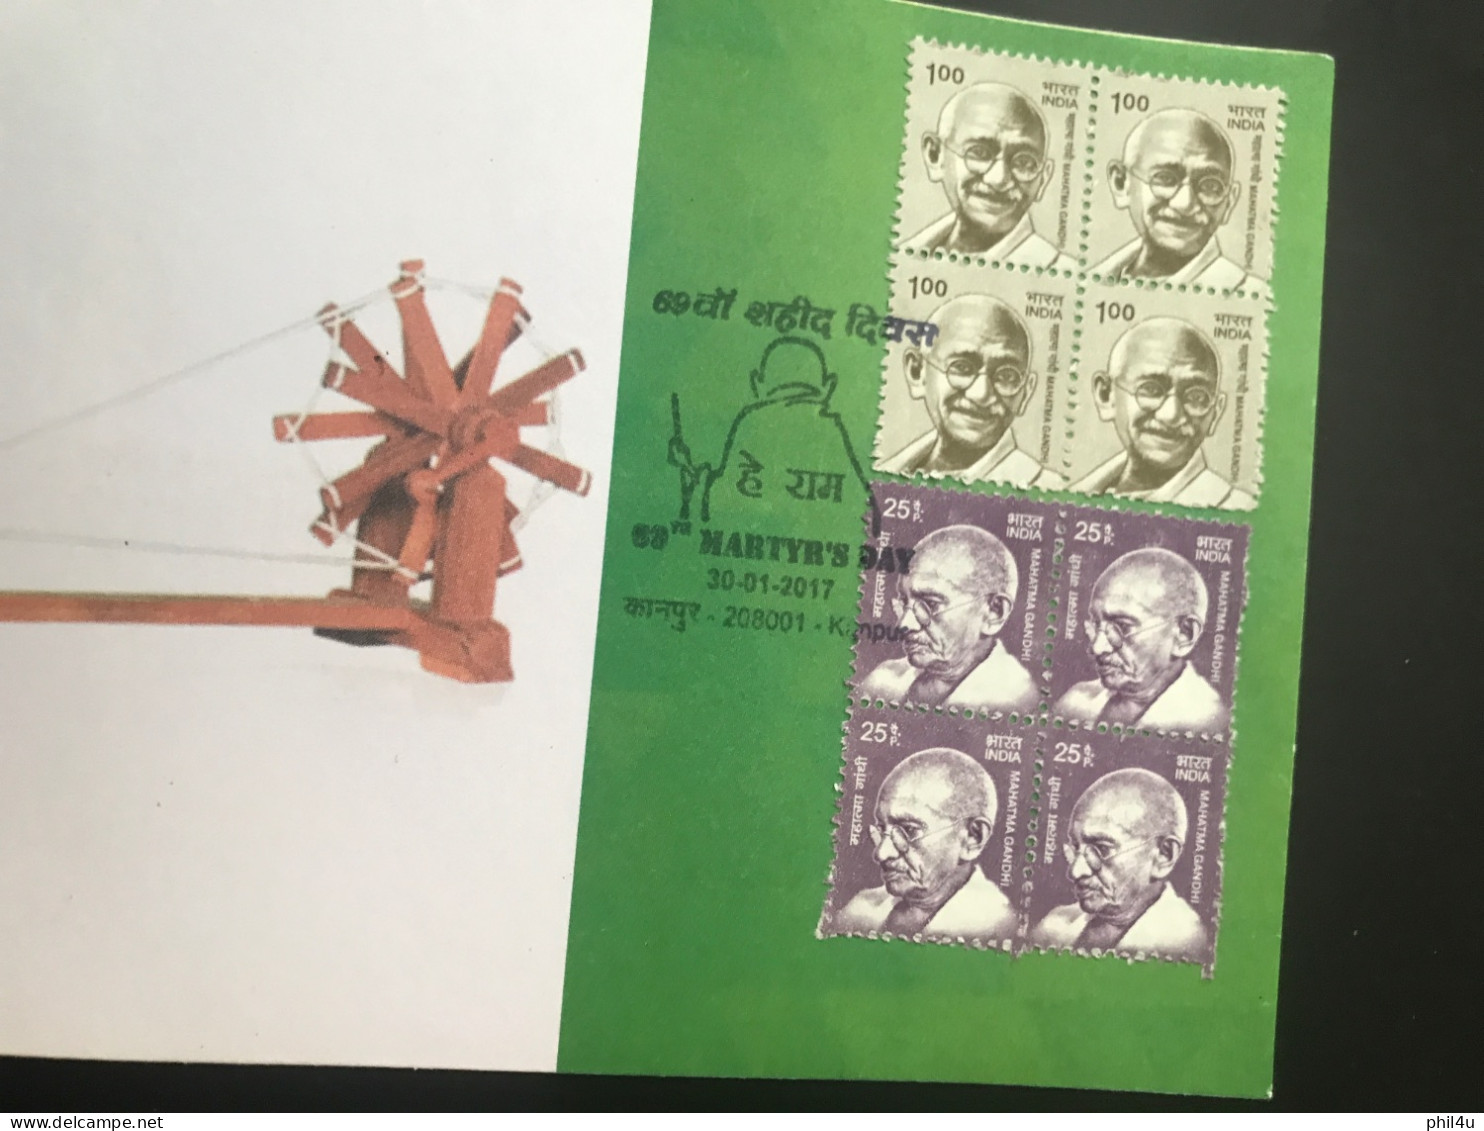 2017 Mahatma Gandhi 69th Martyr’S Day Hey Ram Post Mark Scarce See Photos - Mahatma Gandhi